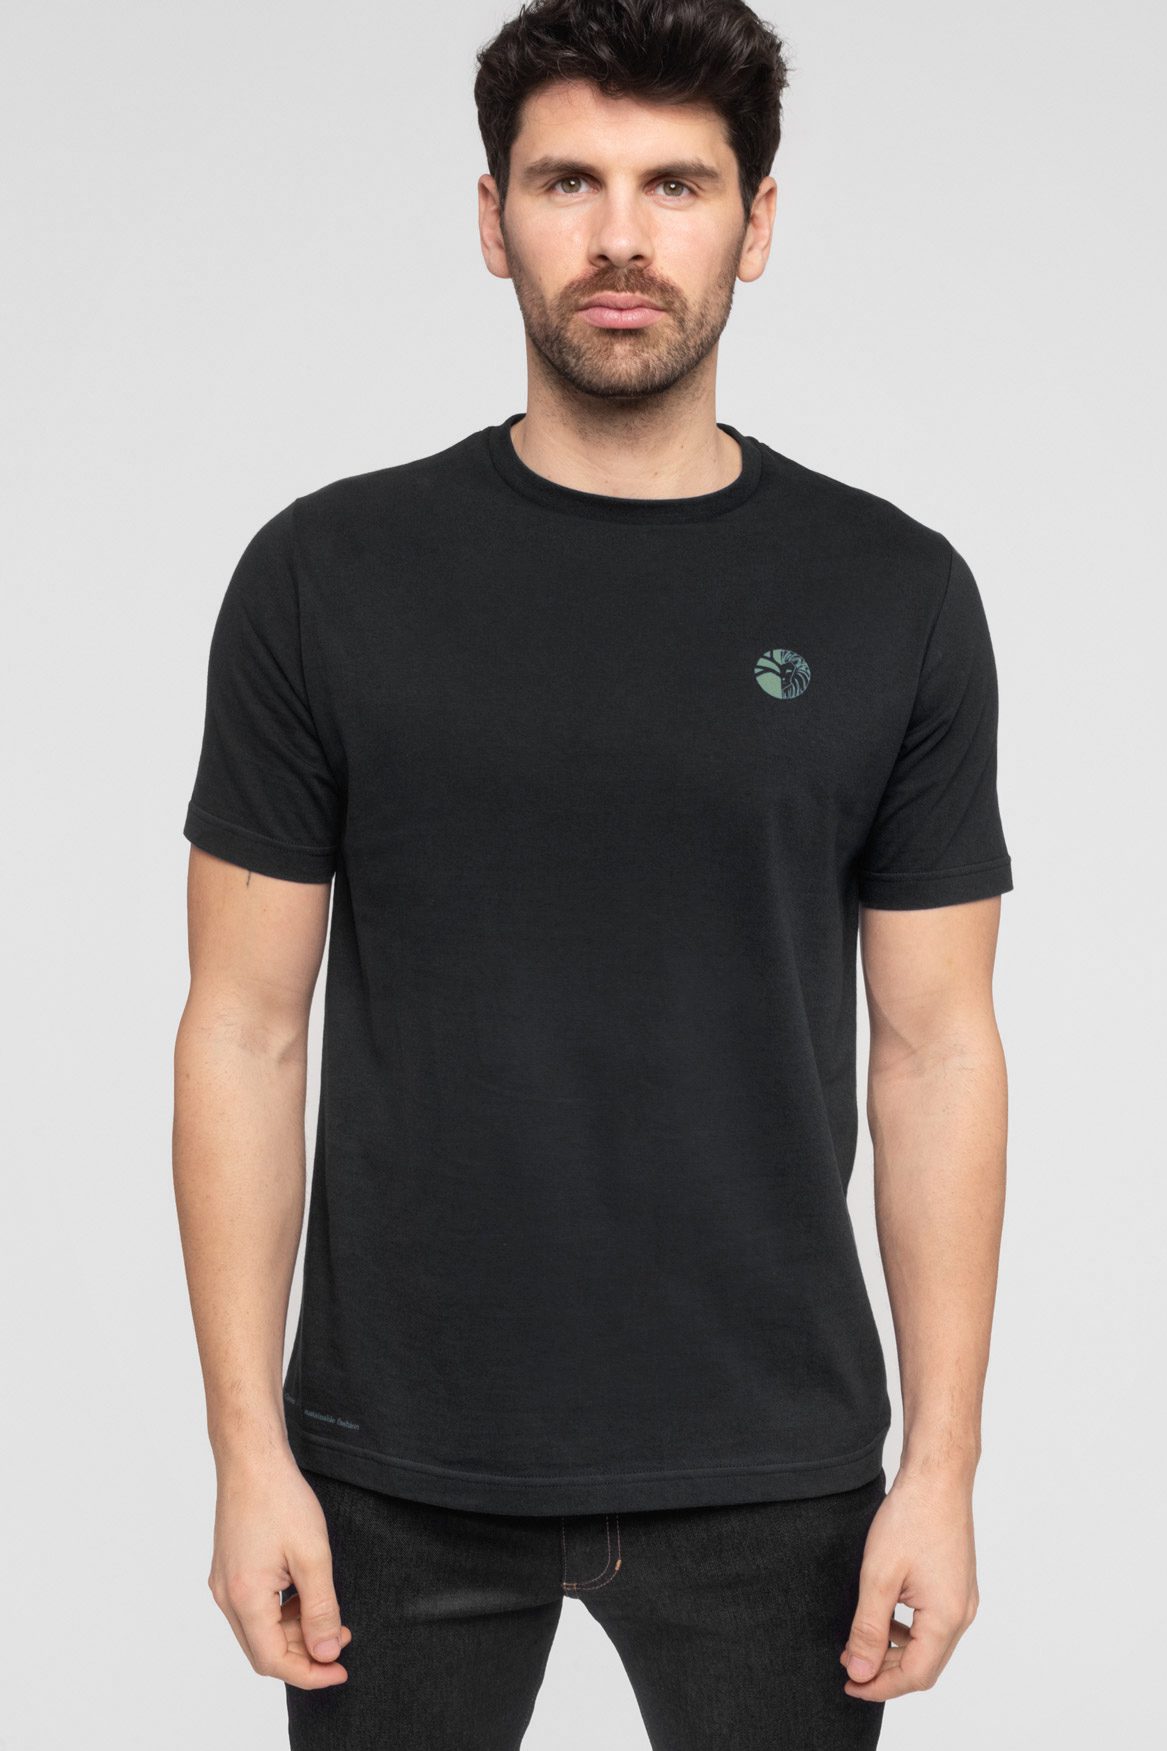 LÉO - T-shirt 100% Coton BIO - NOIR